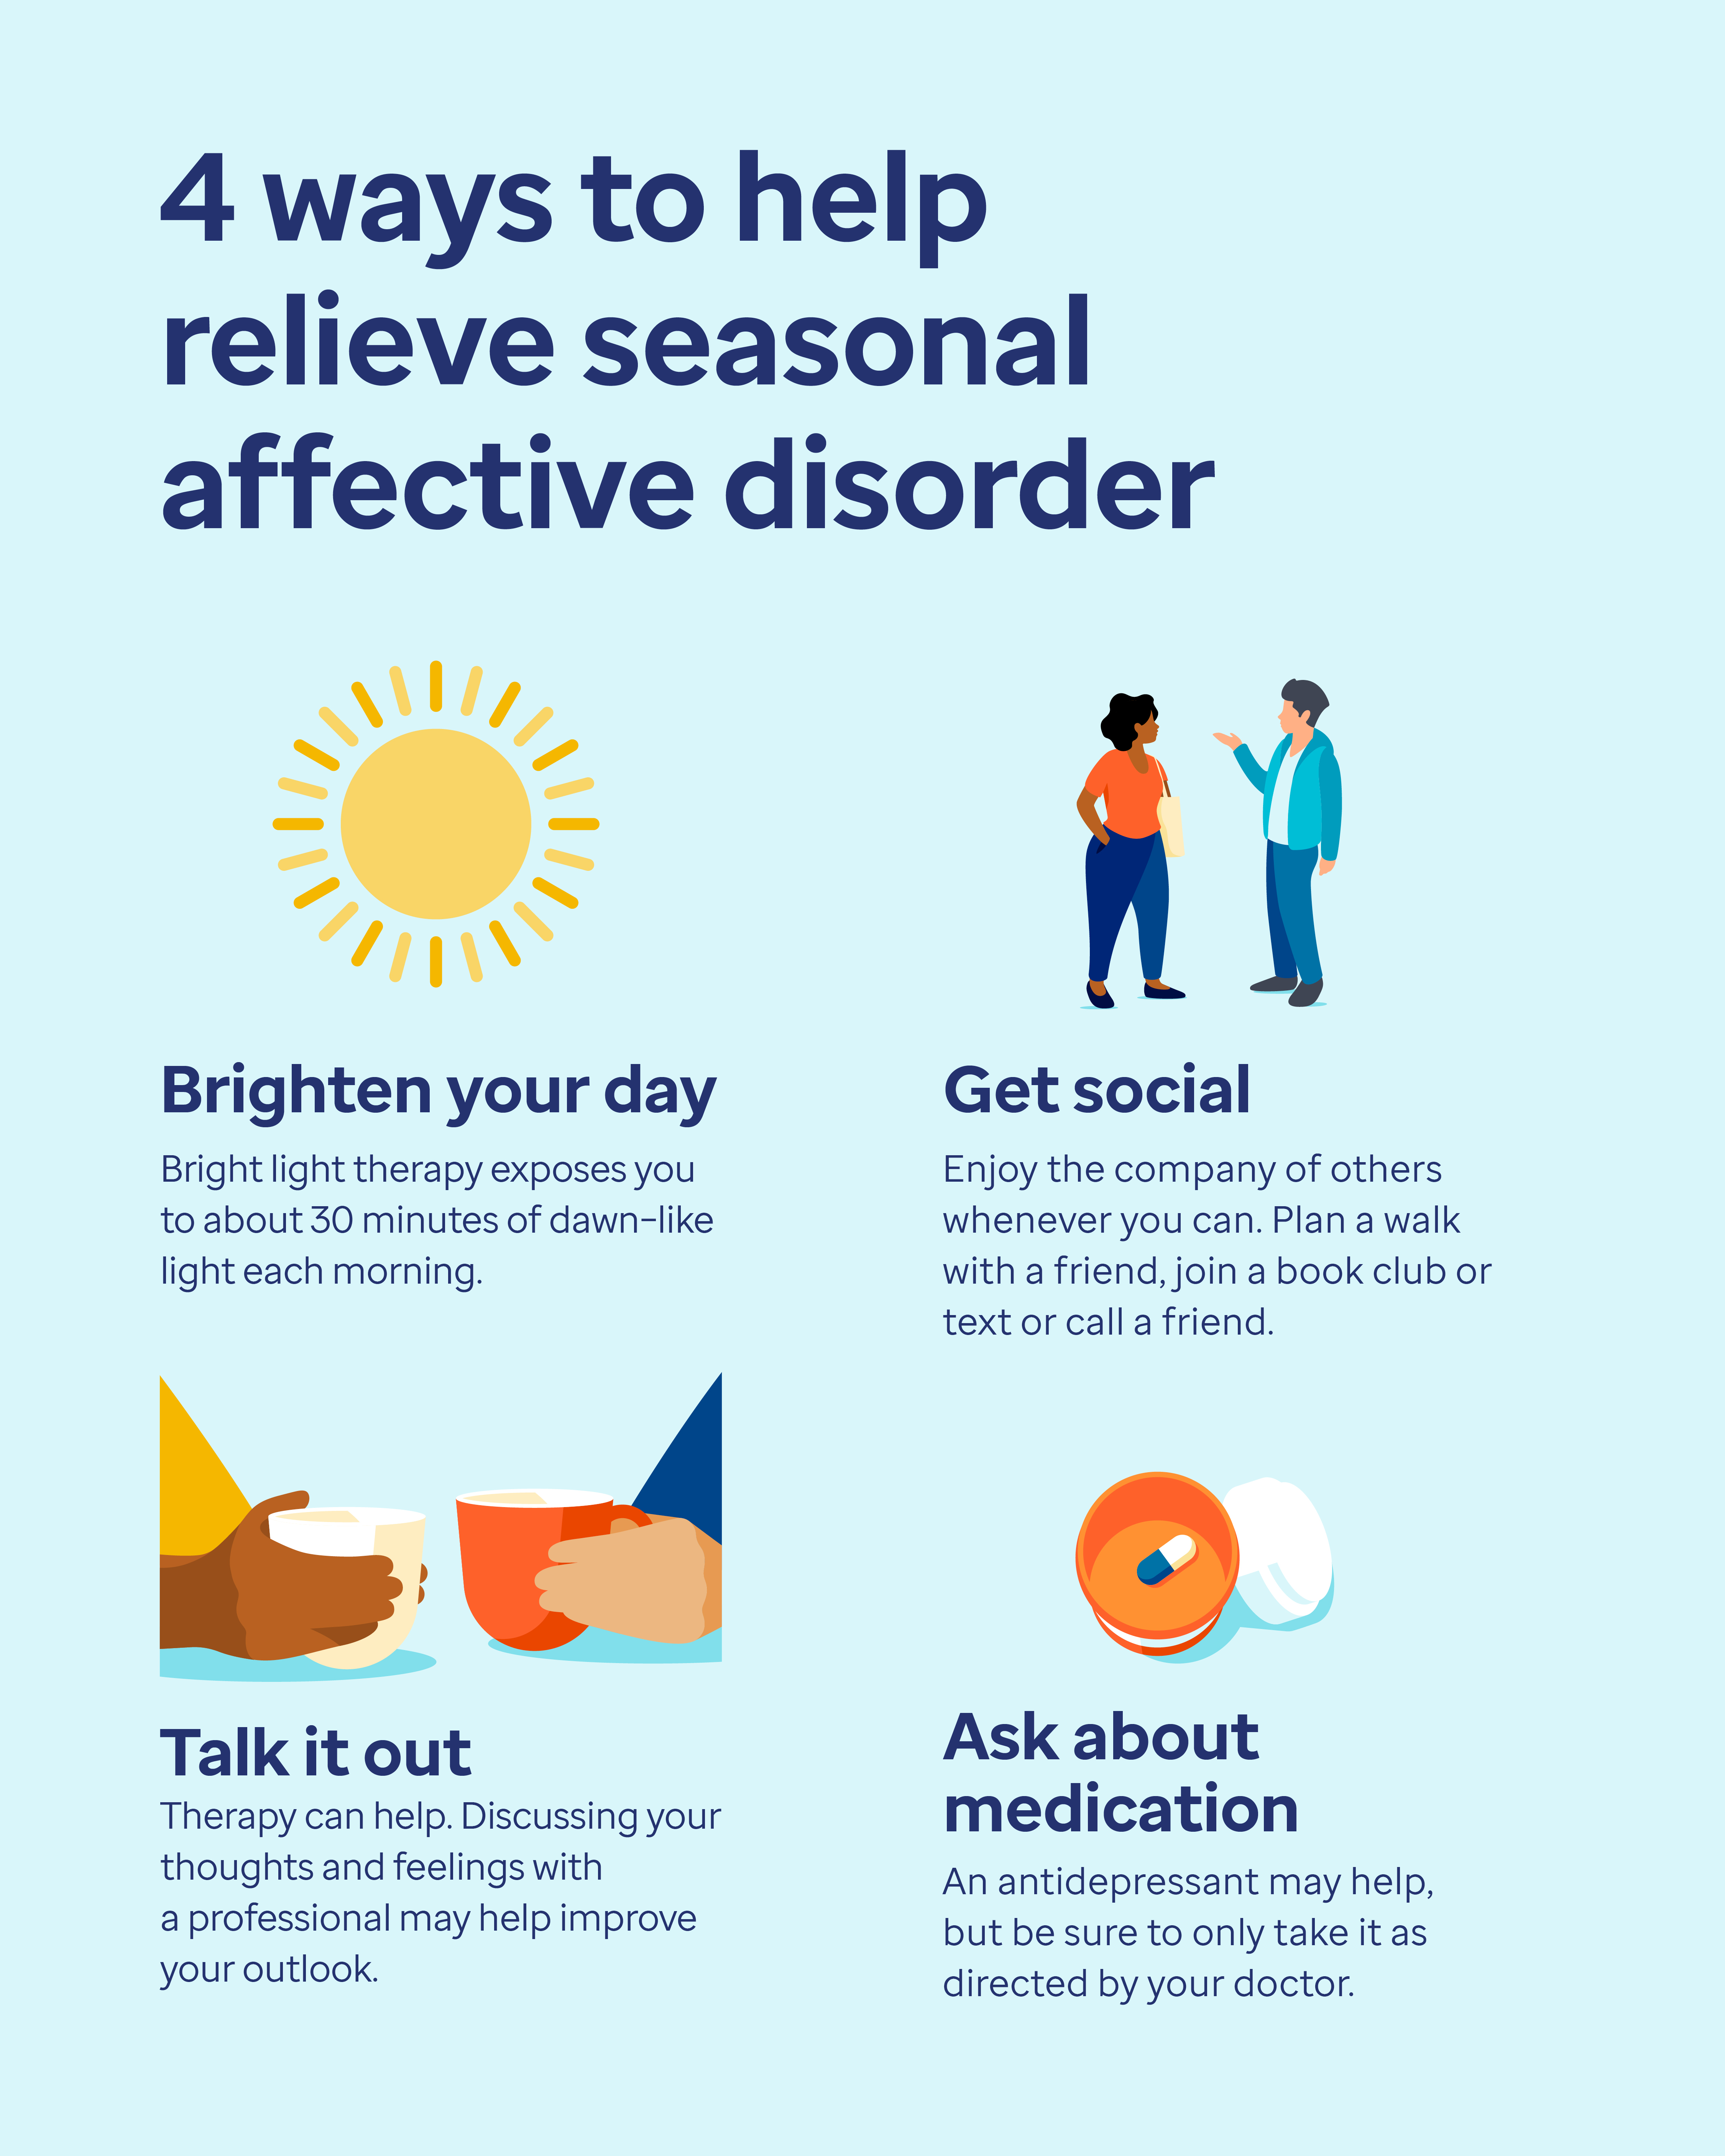 4 Ways to help relieve seasonal affective disorder